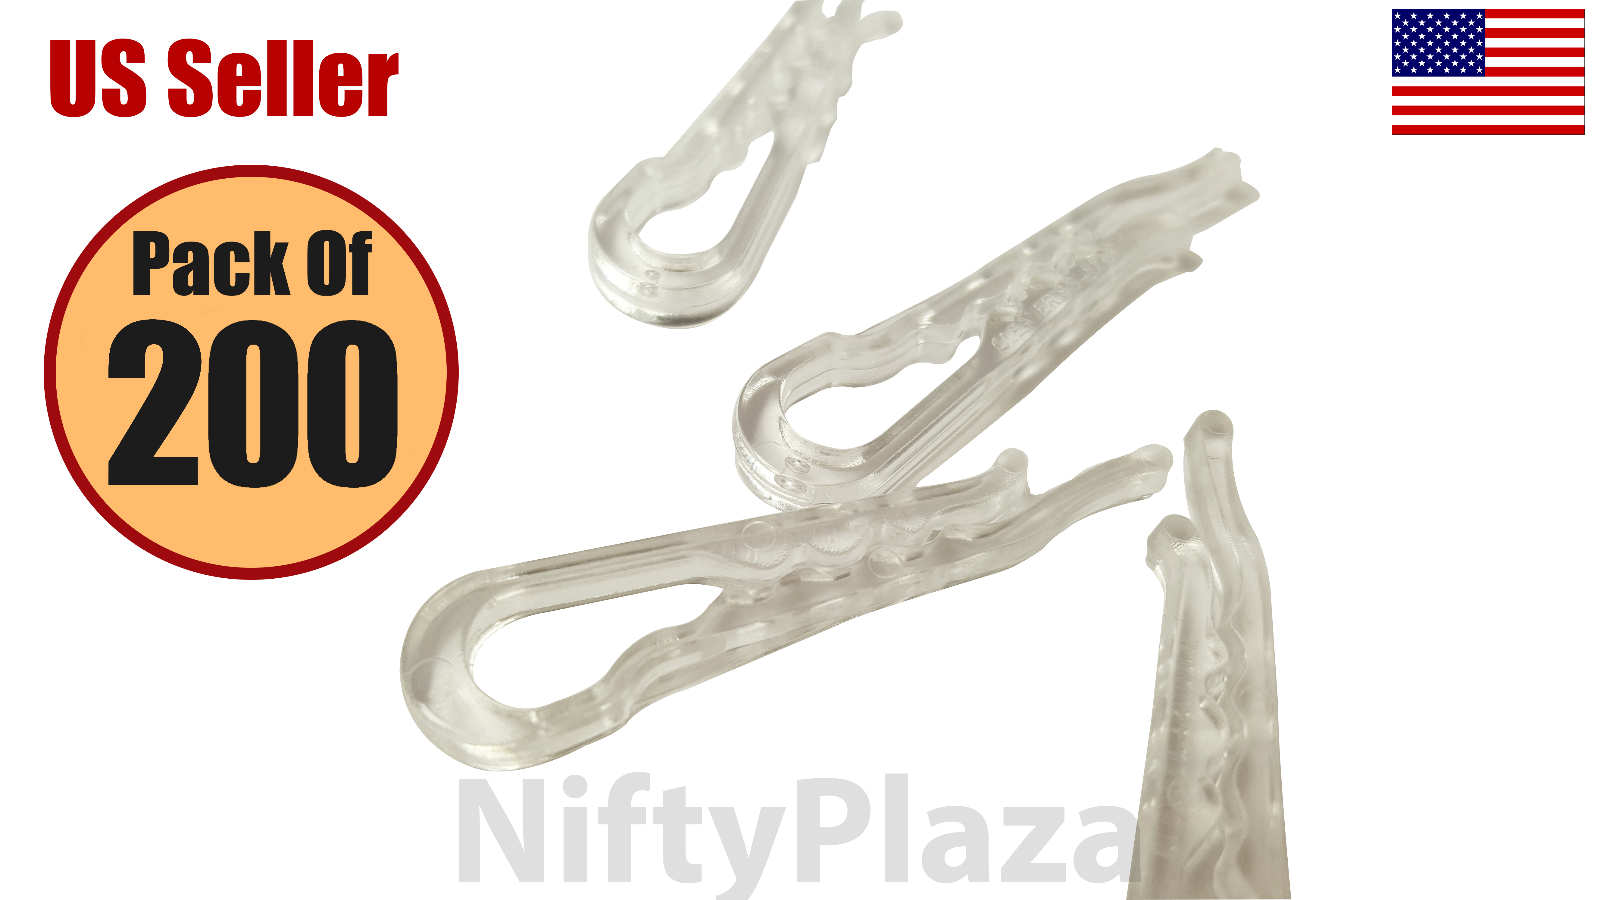 Niftyplaza 200 Clear Plastic Alligator Clips For Shirts Folding Ties Socks Pants